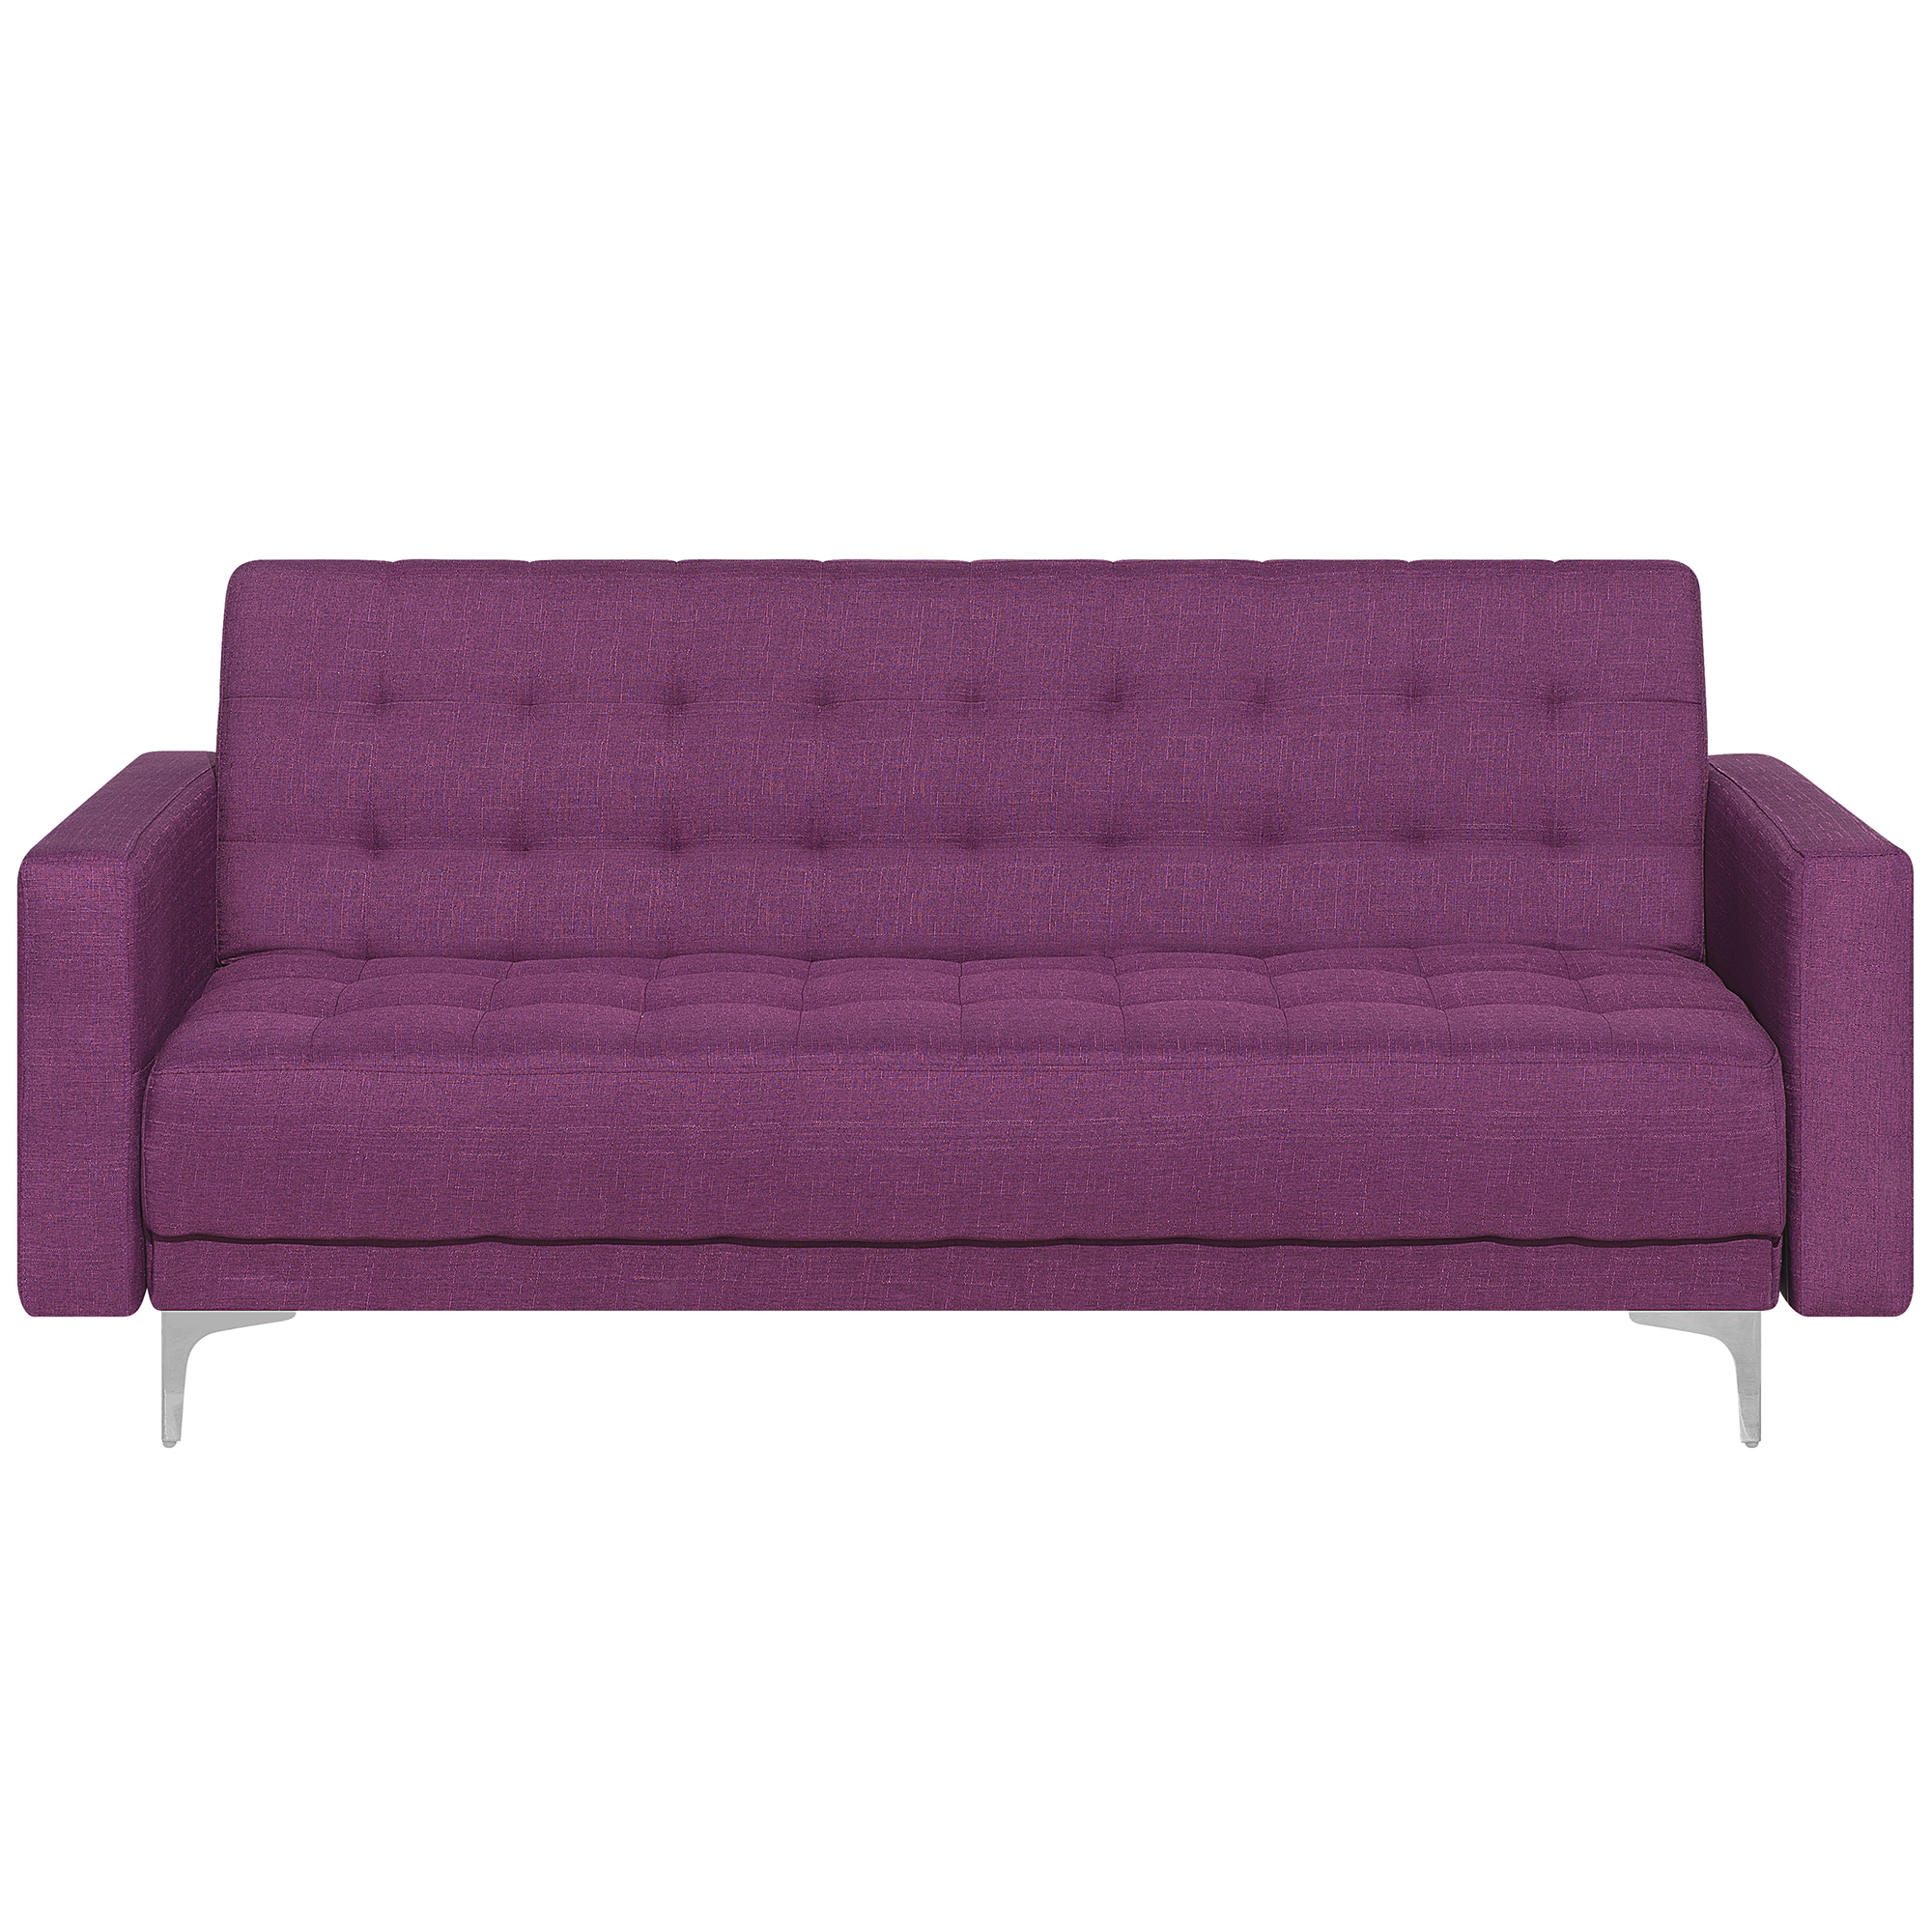 Beliani Sofa Bed Purple Tufted Fabric Modern Living Room Modular 3 Seater Silver Legs Track Arm